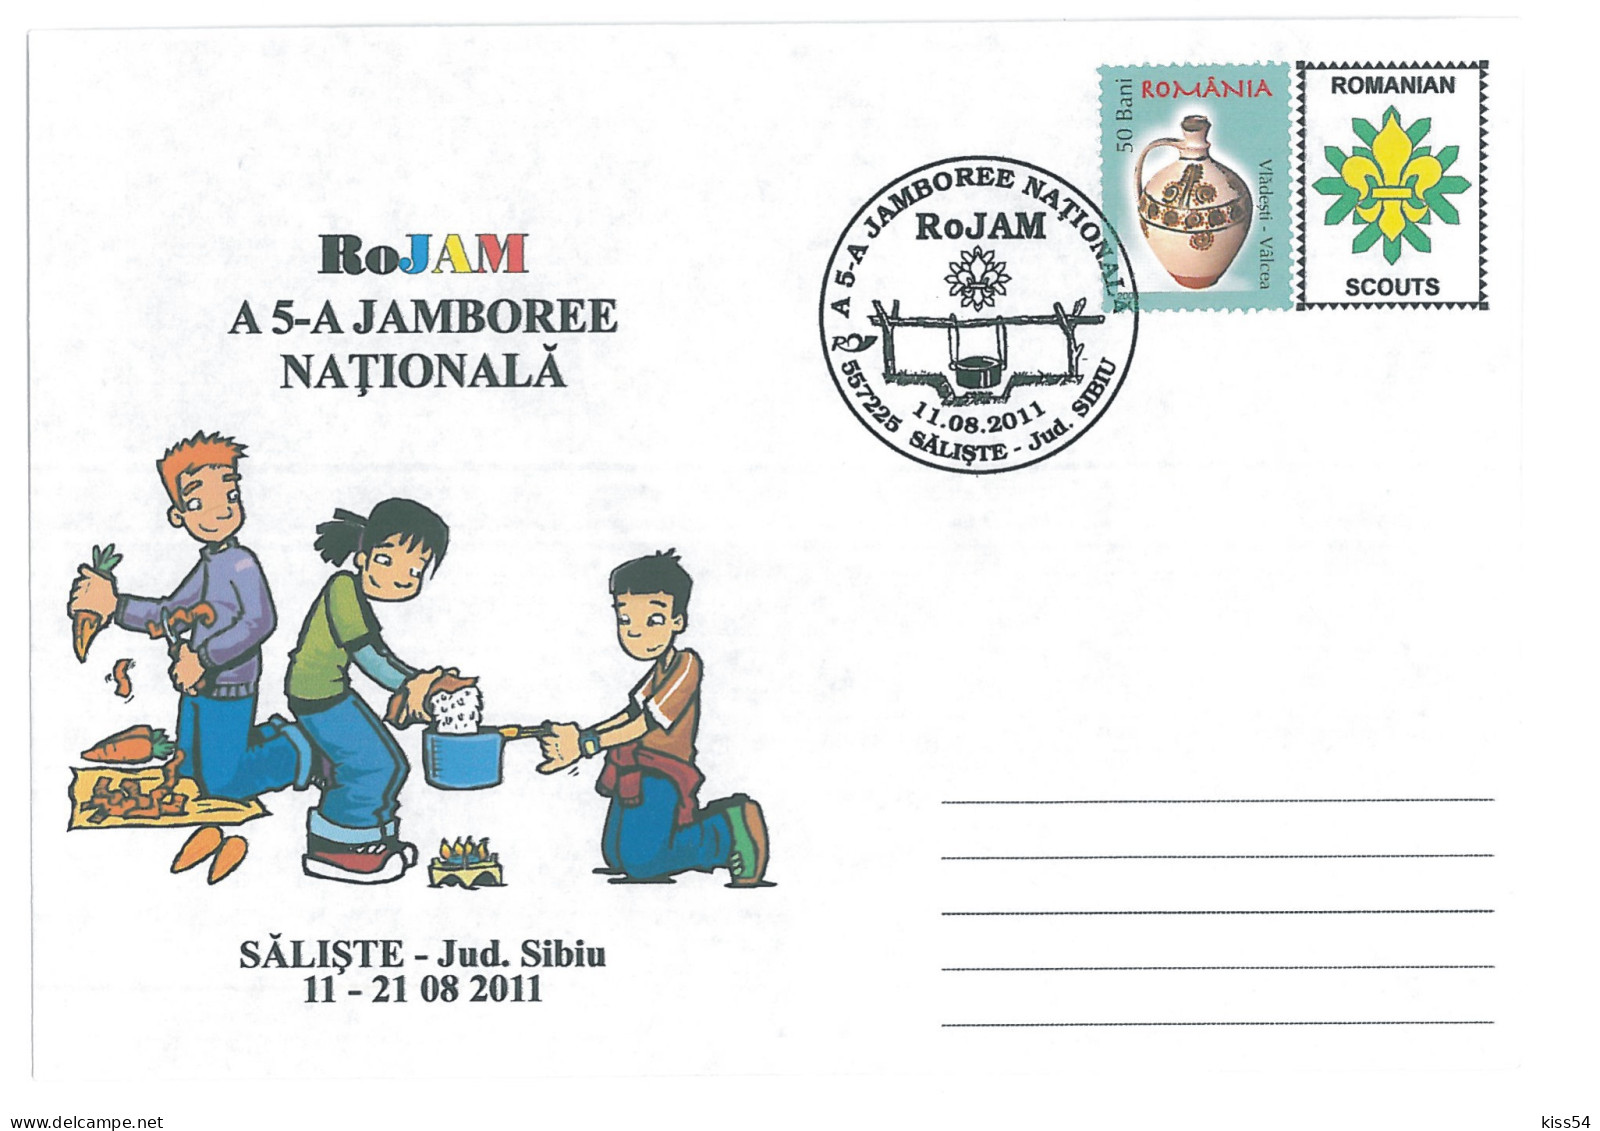 SC 47 - 1298 ROMANIA, National JAMBOREE, Scout - Cover - Used - 2011 - Cartas & Documentos